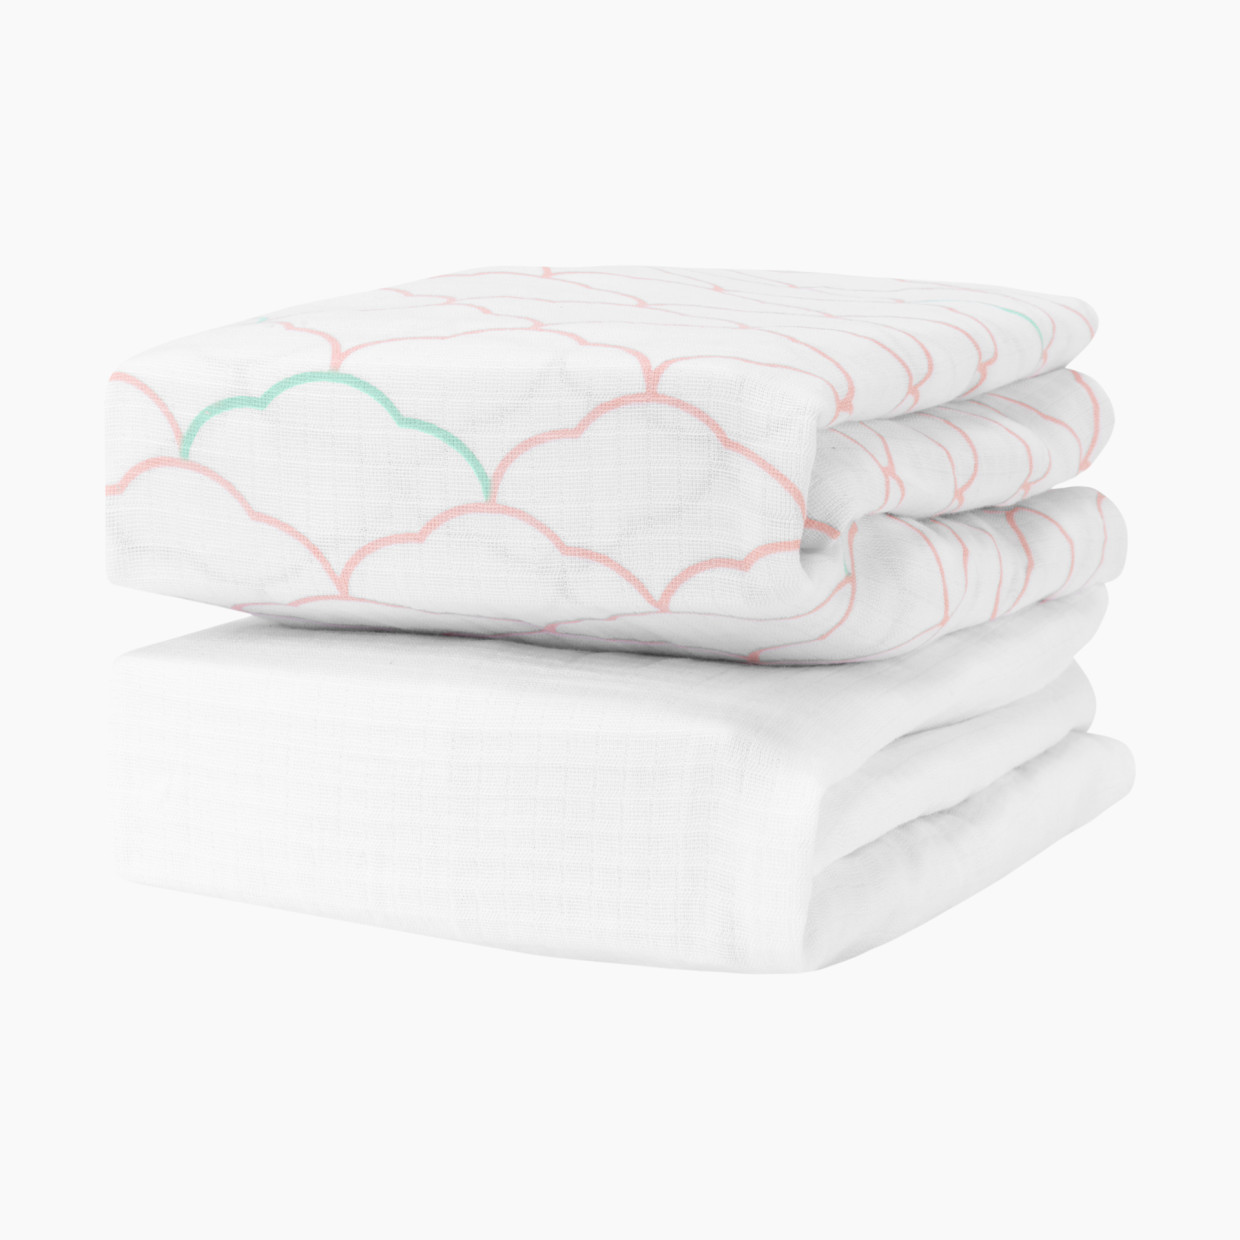 Newton Baby 2-Pack Organic Cotton Breathable Mini Crib Sheets - Dreamweaver Blush Coral + Solid White.